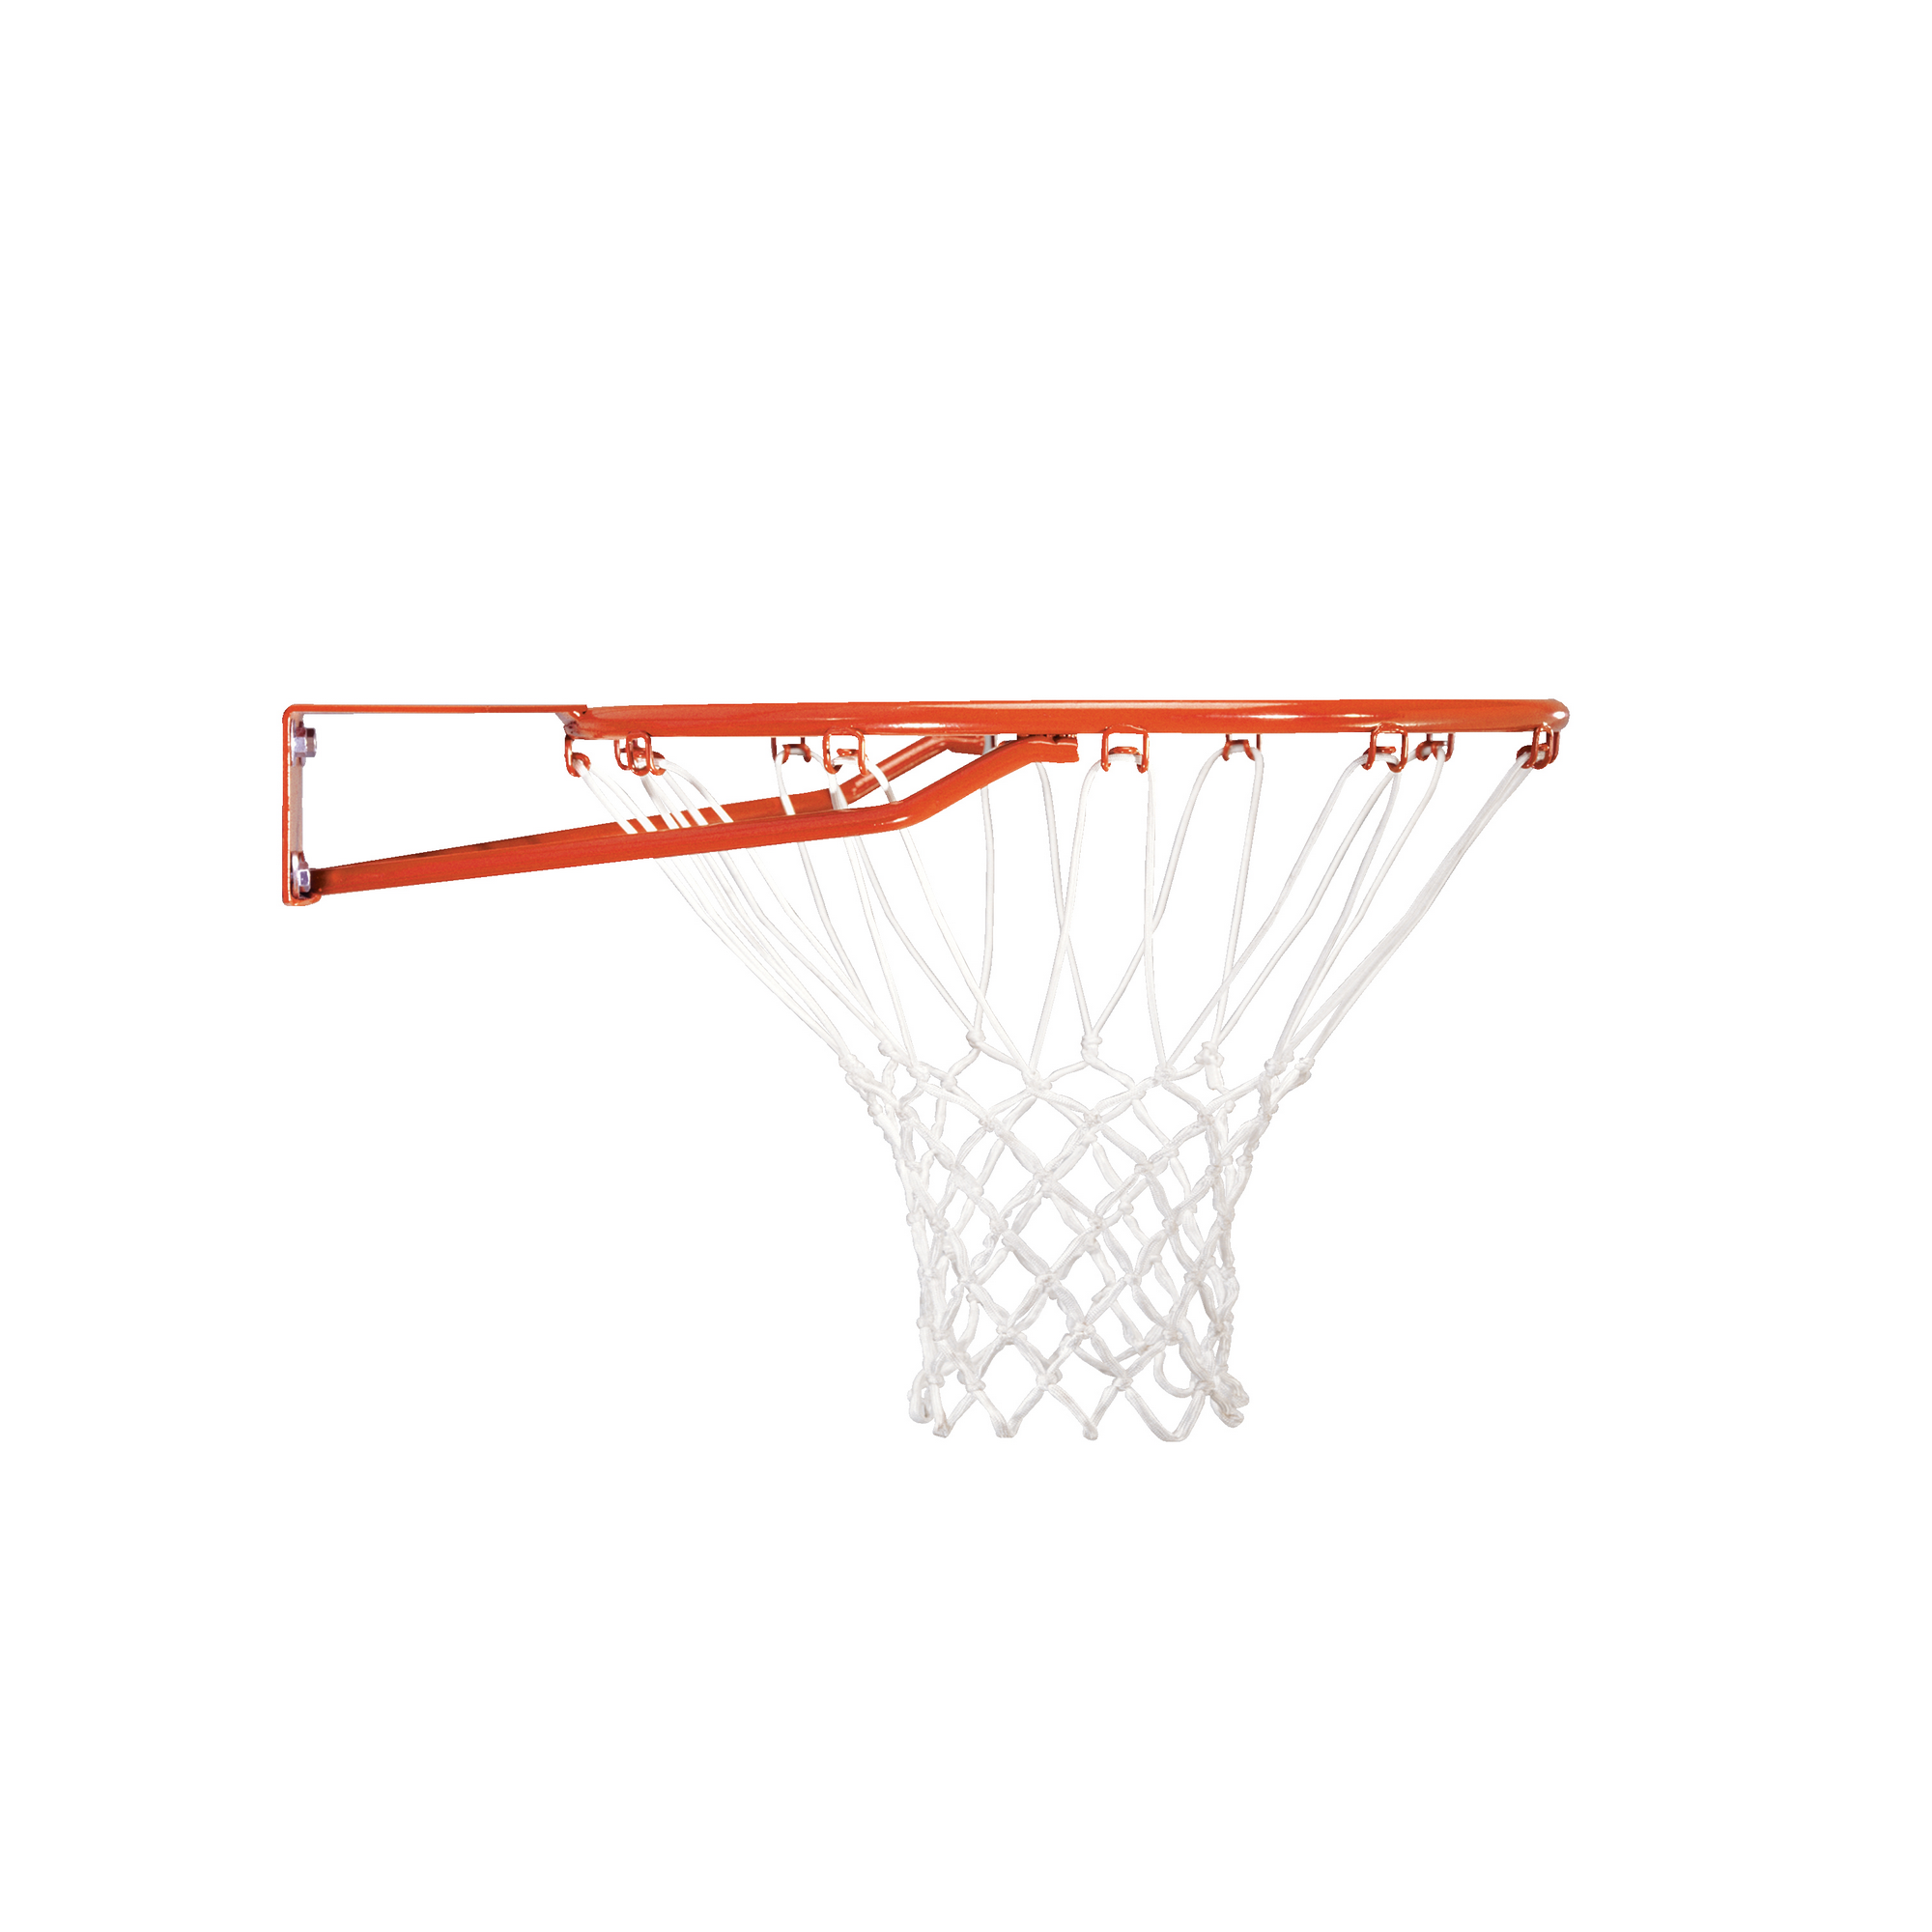 Basketballkorb 'Alabama' schwarz/rot mit Standfuss 81 x 225 cm + product picture